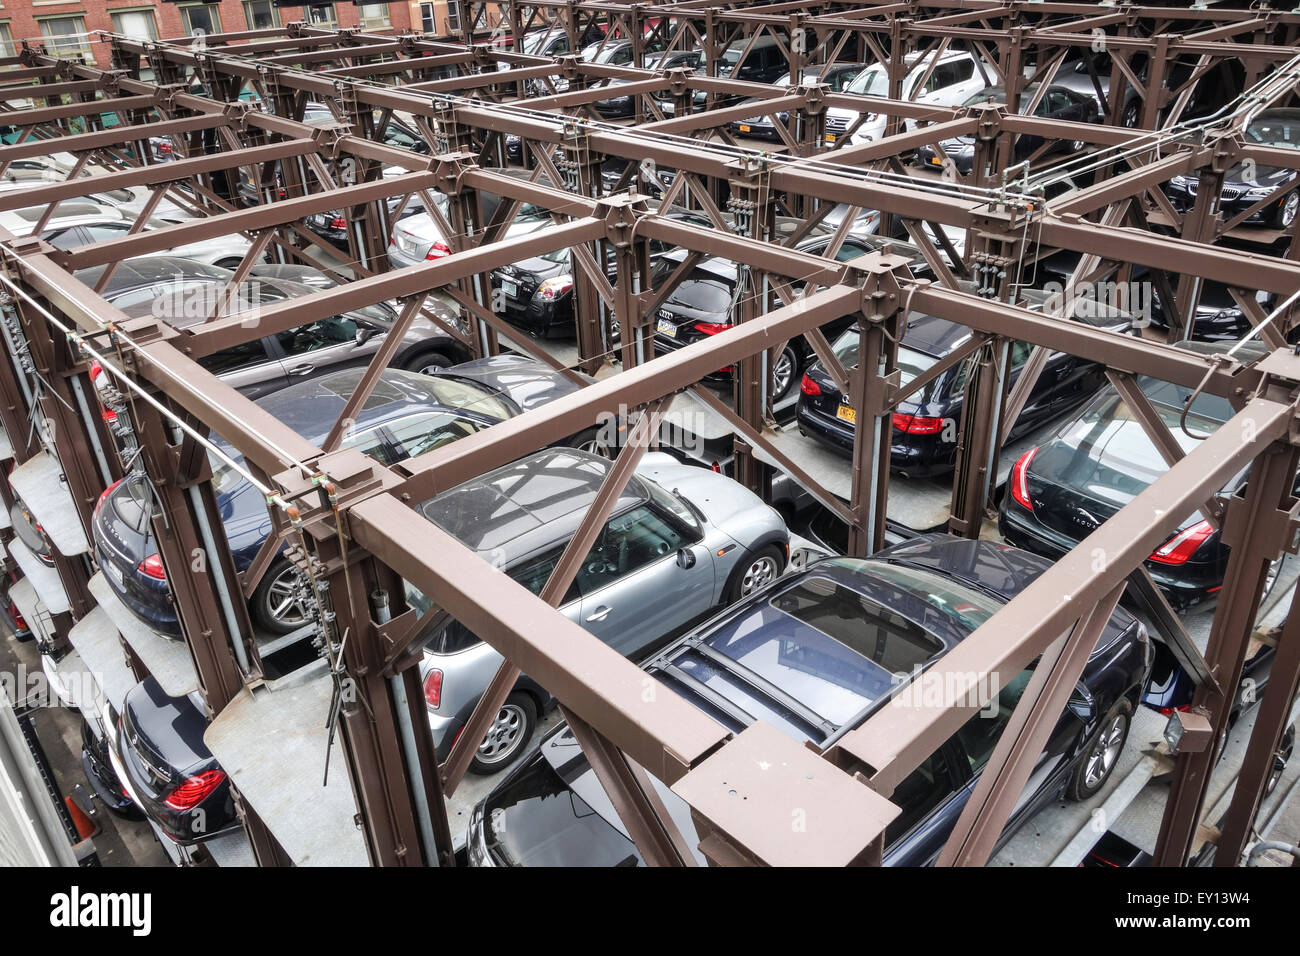 Cars parked vertically, Parking lift, multilevel sysytem, elevator, from above. New York, Manhattan, USA. Stock Photo